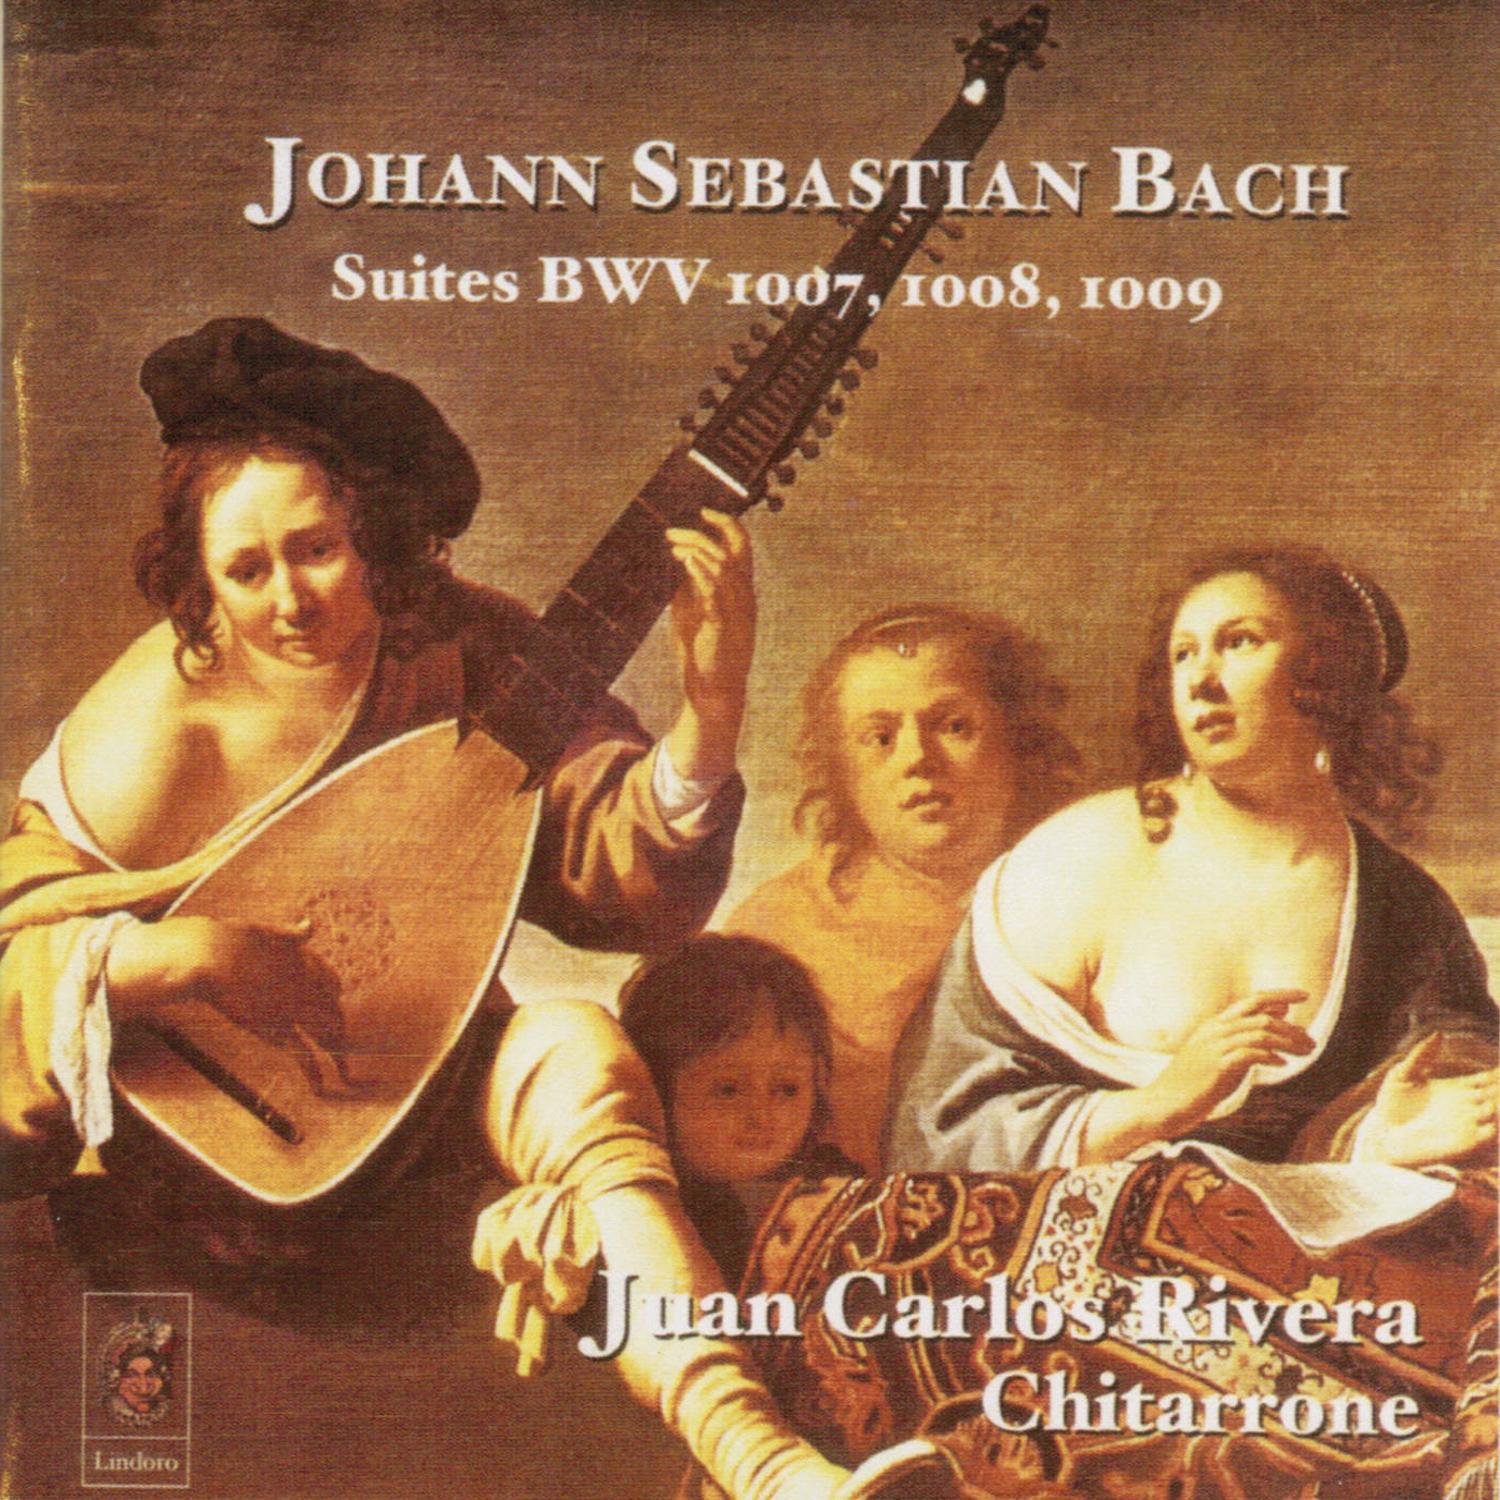 Suite BWV 1009: Sarabande